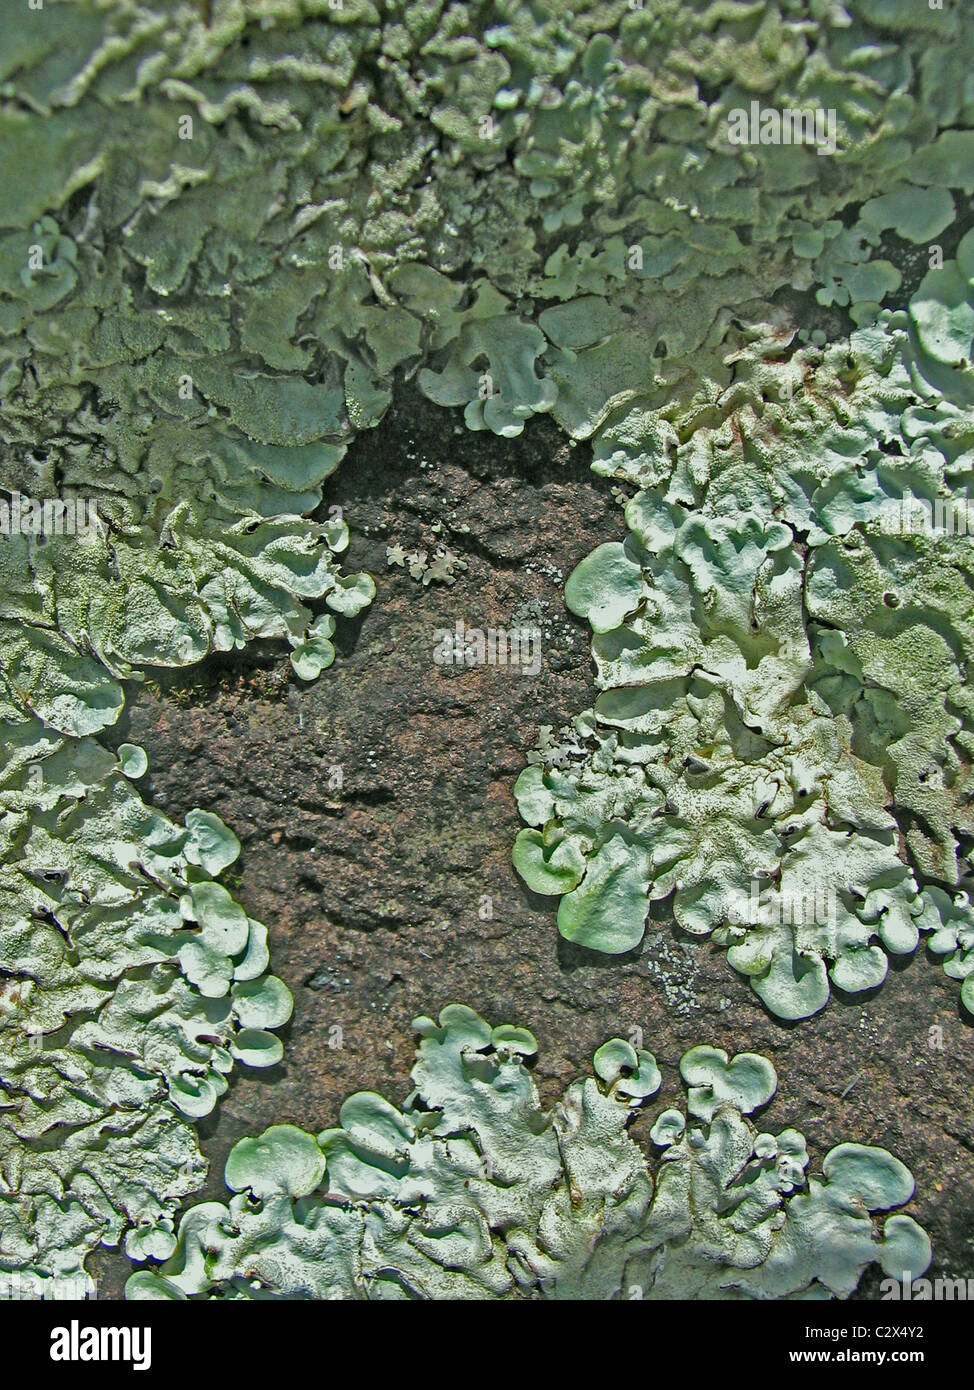 lichen Lecanora muralis, thallus on rocks Stock Photo